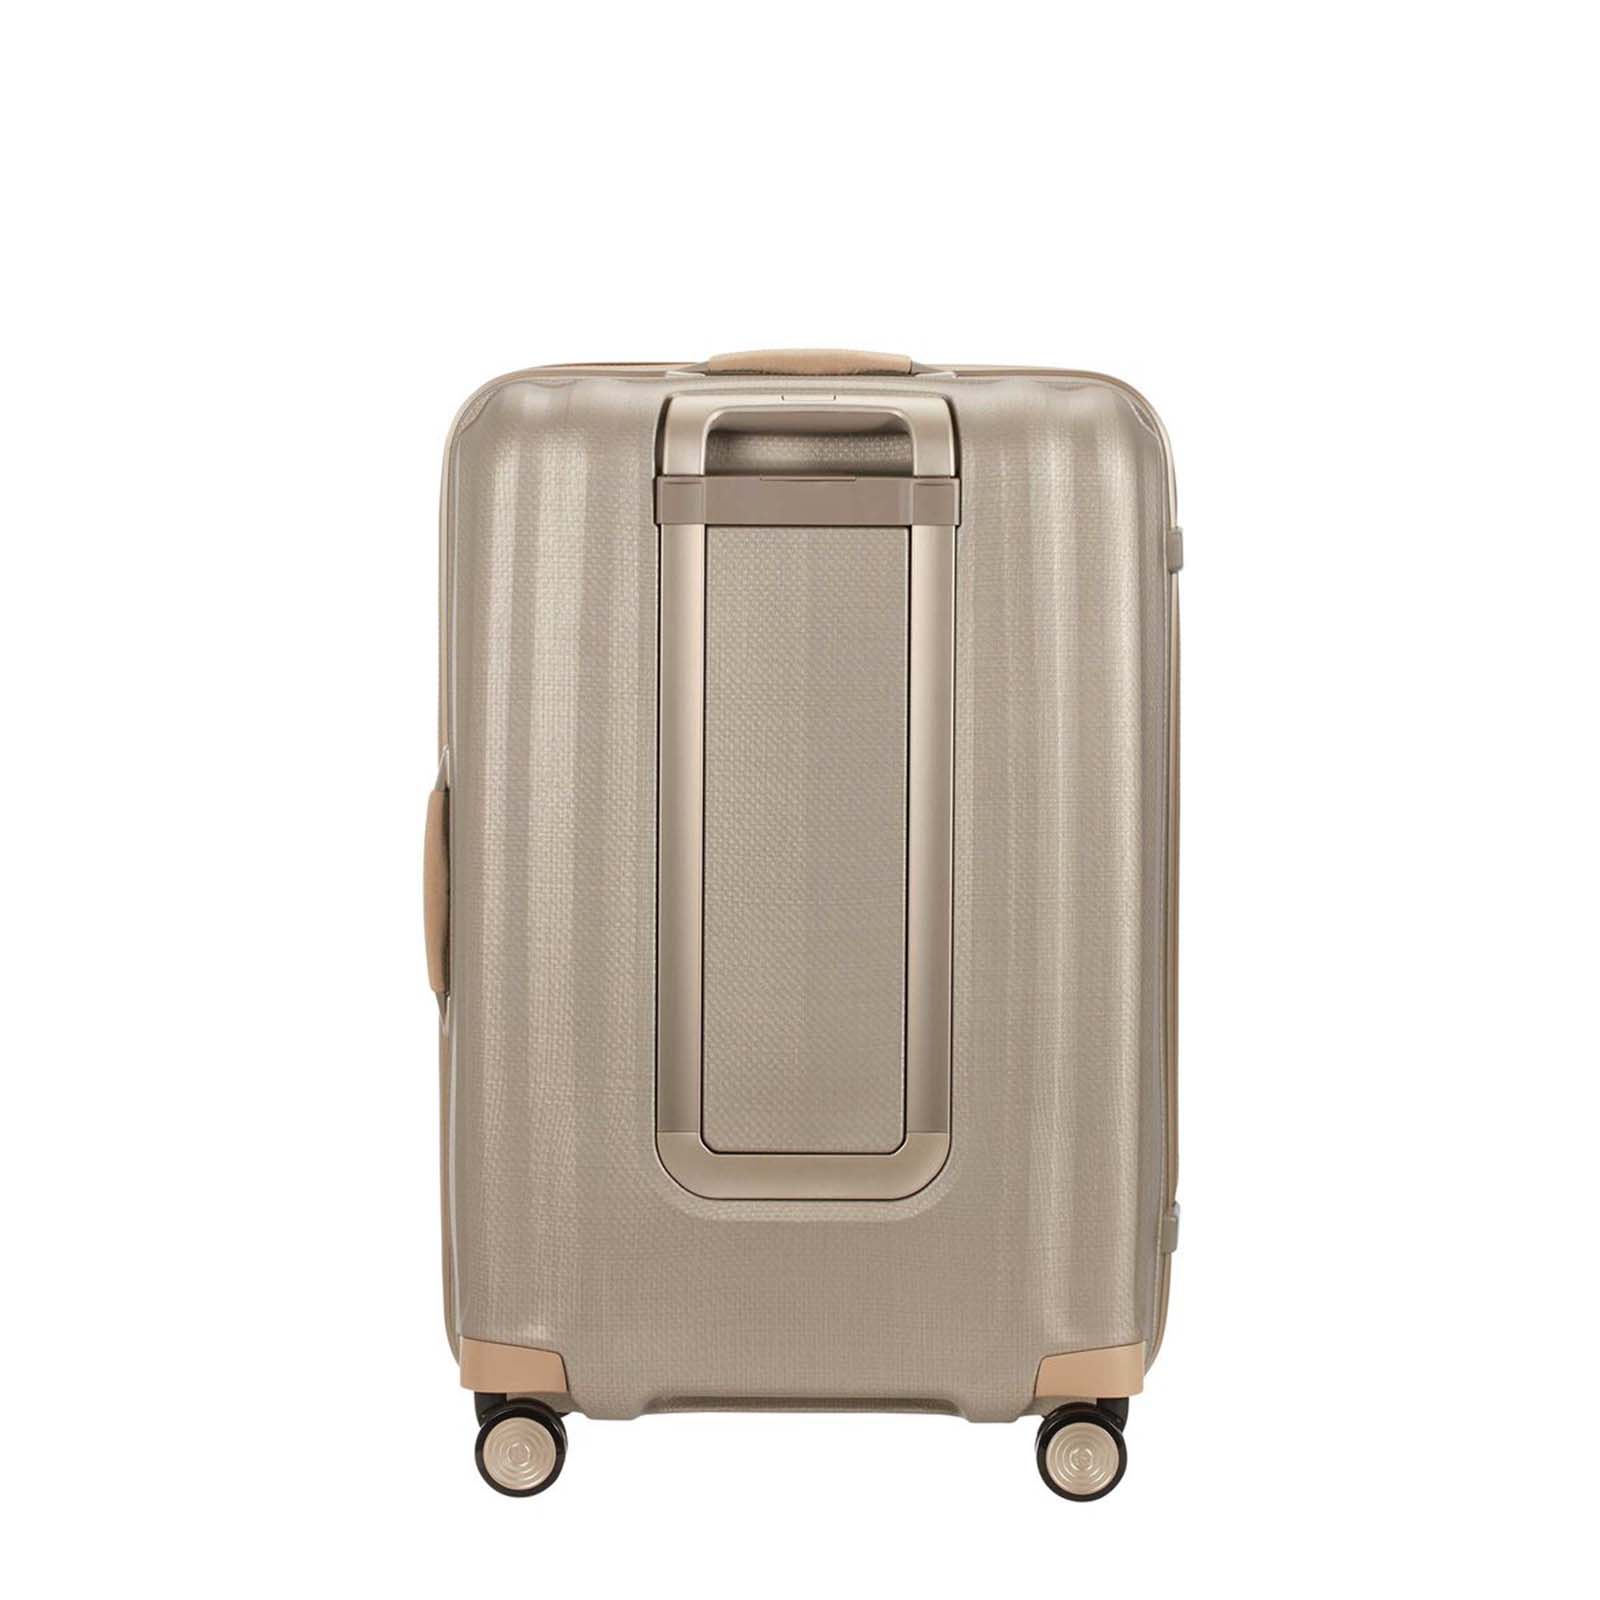 Samsonite-Lite-Cube-Prime-76cm-Suitcase-Ivory-Gold-Back